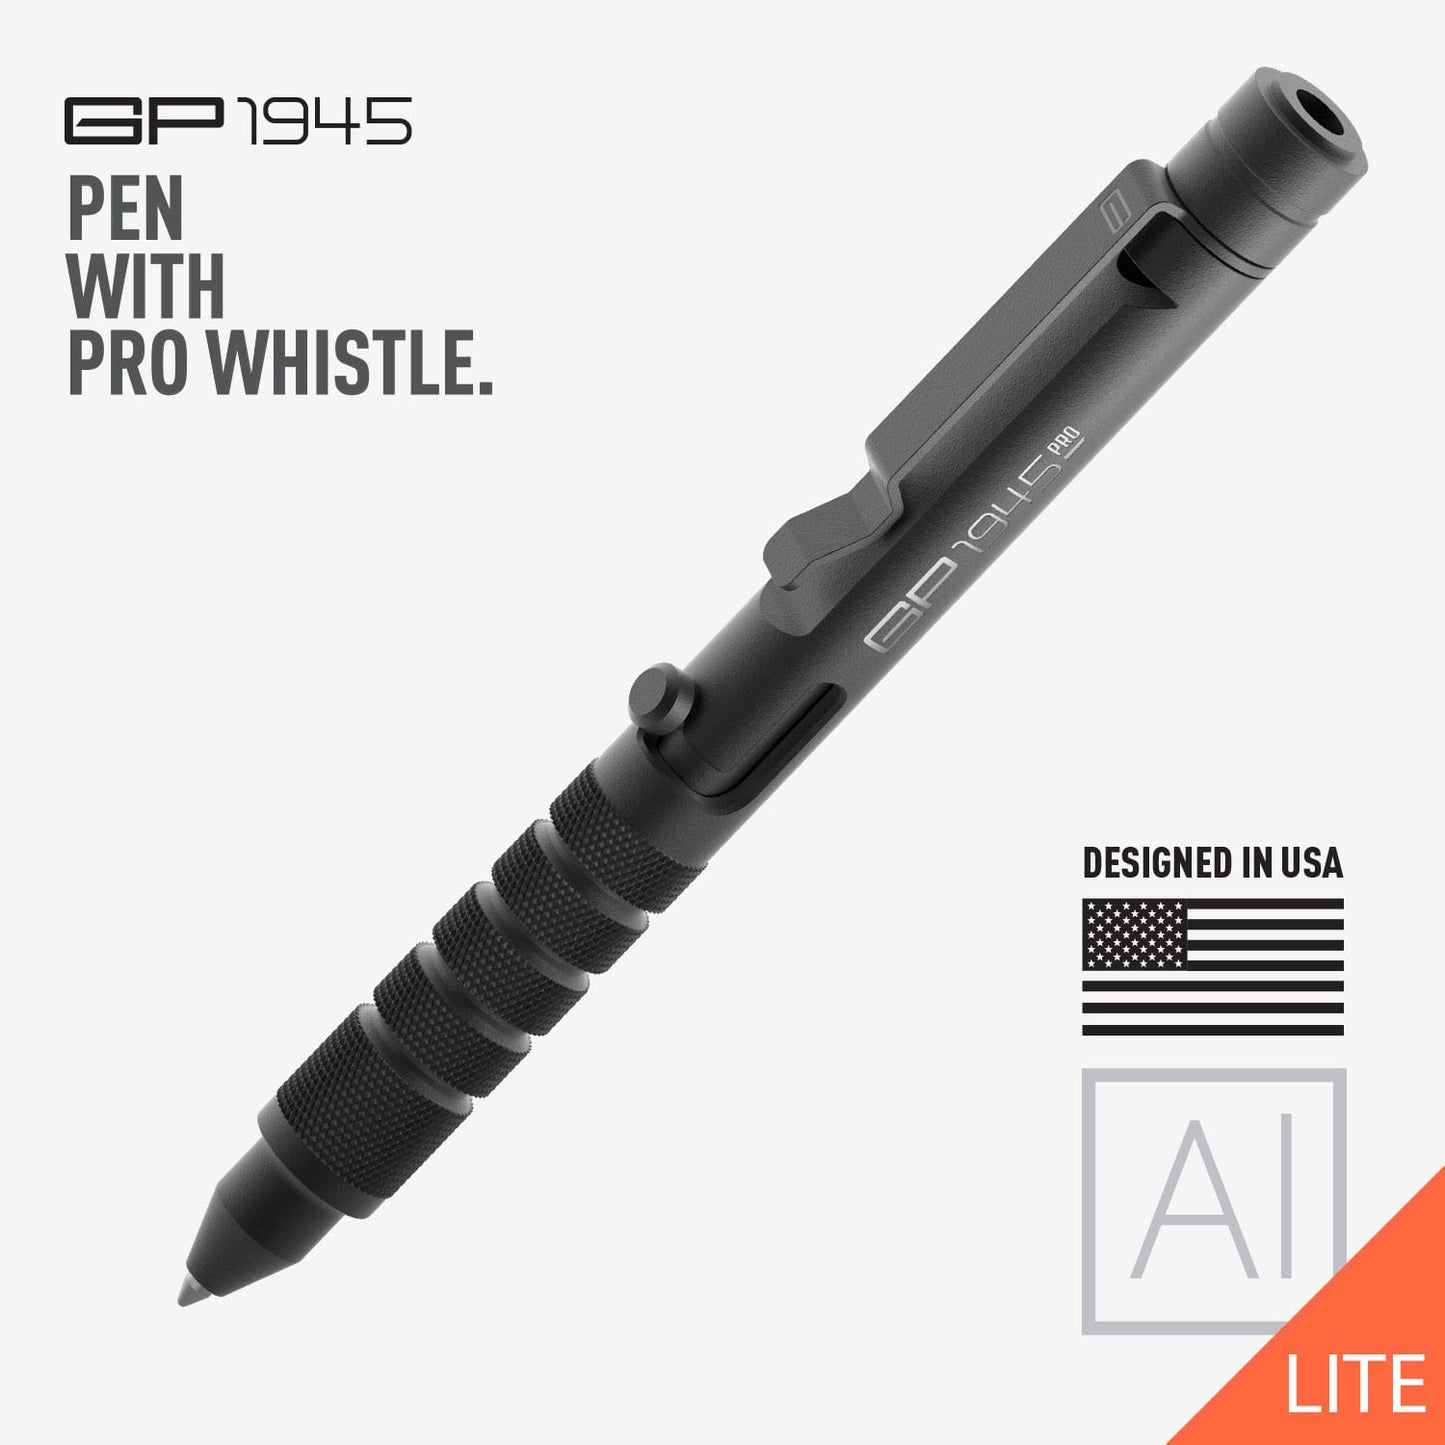 GPCA 1945 Bolt Action Pen Lite aluminum dark theme, fine and smooth writing instrument